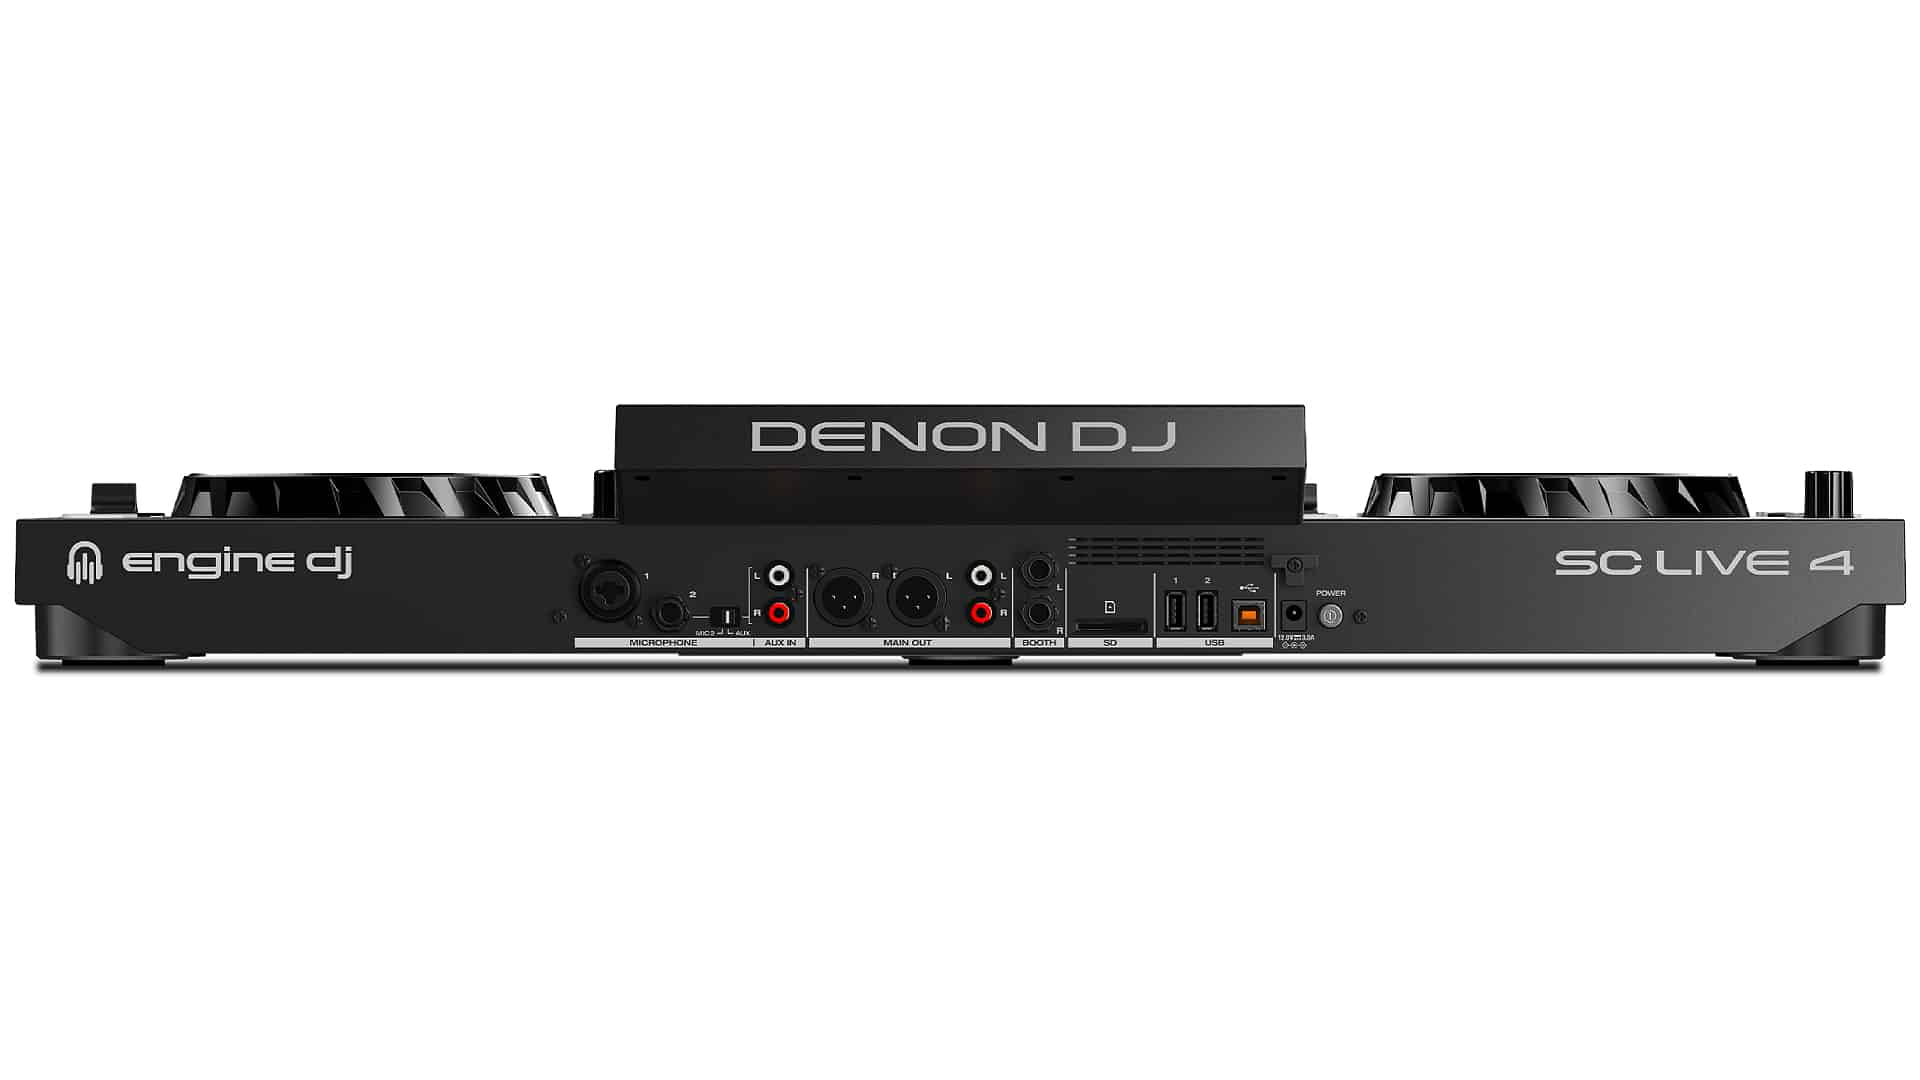 Denon DJ SC LIVE 4 Test